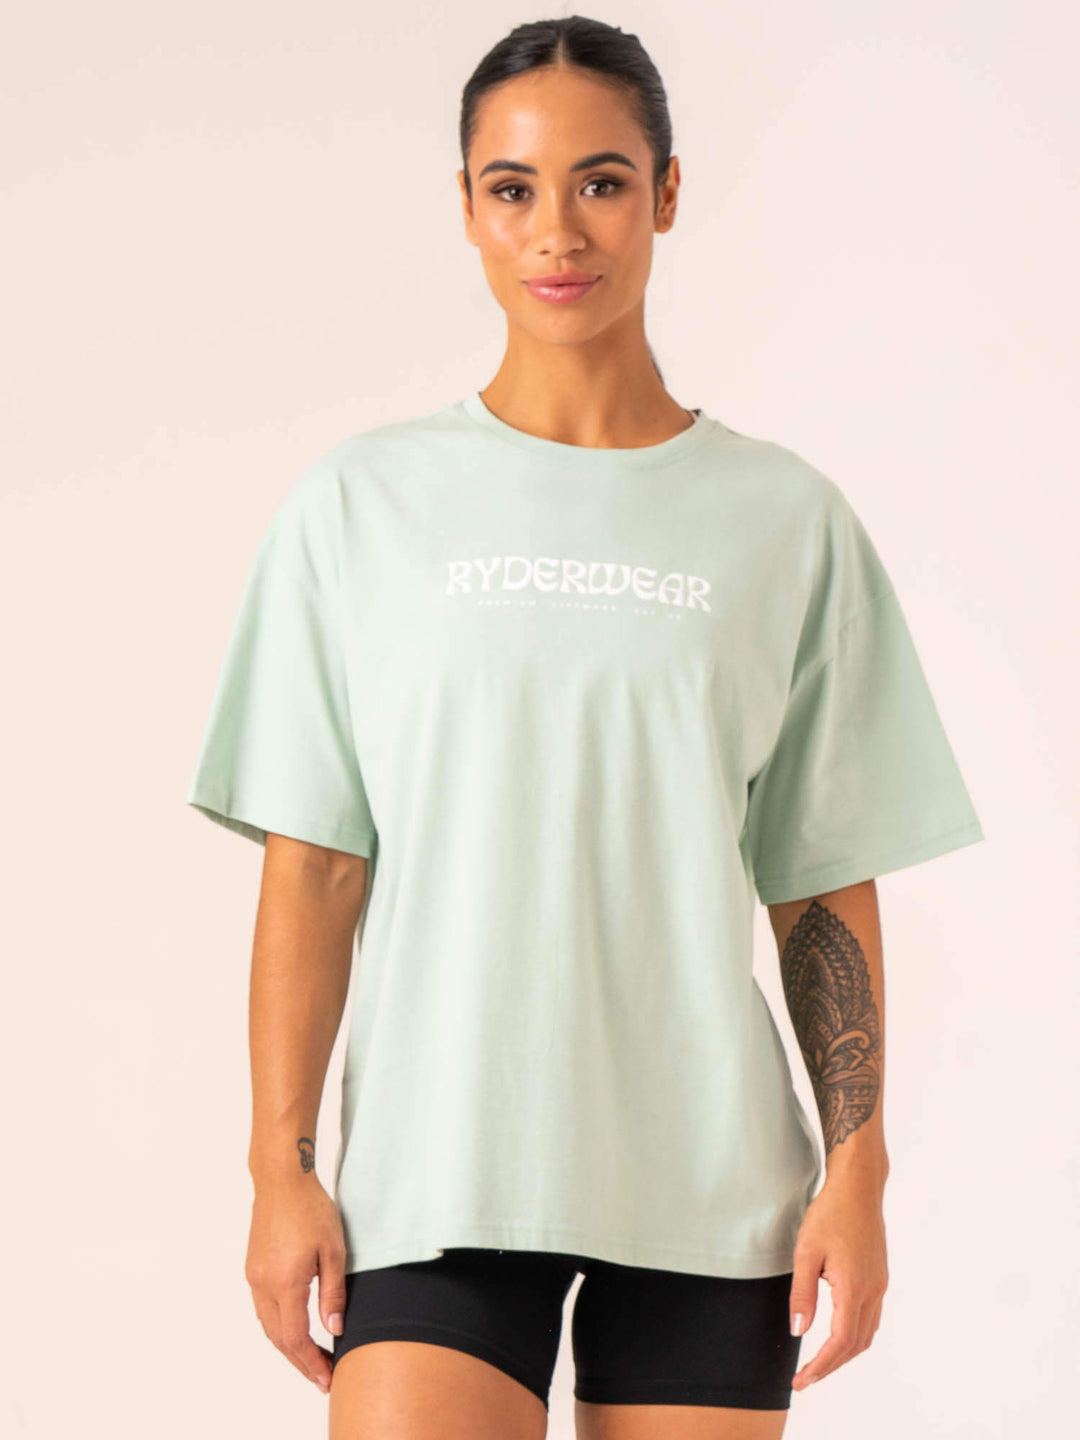 Retro Oversized T-Shirt - Mint Clothing Ryderwear 